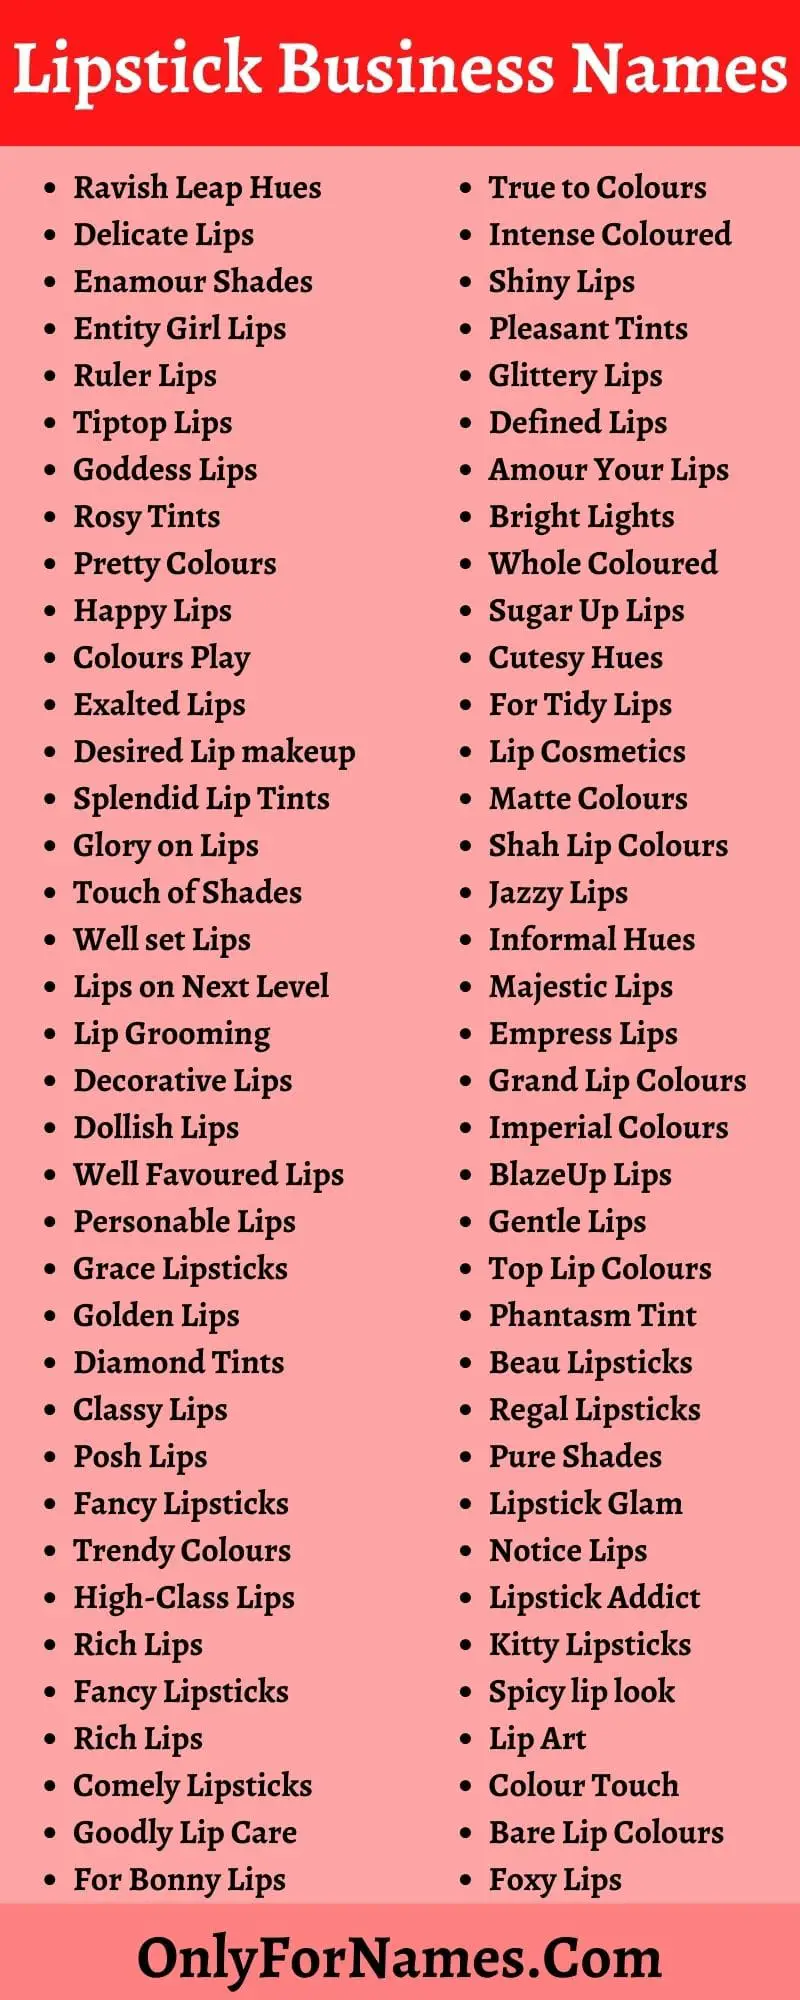 Lipstick Business Names